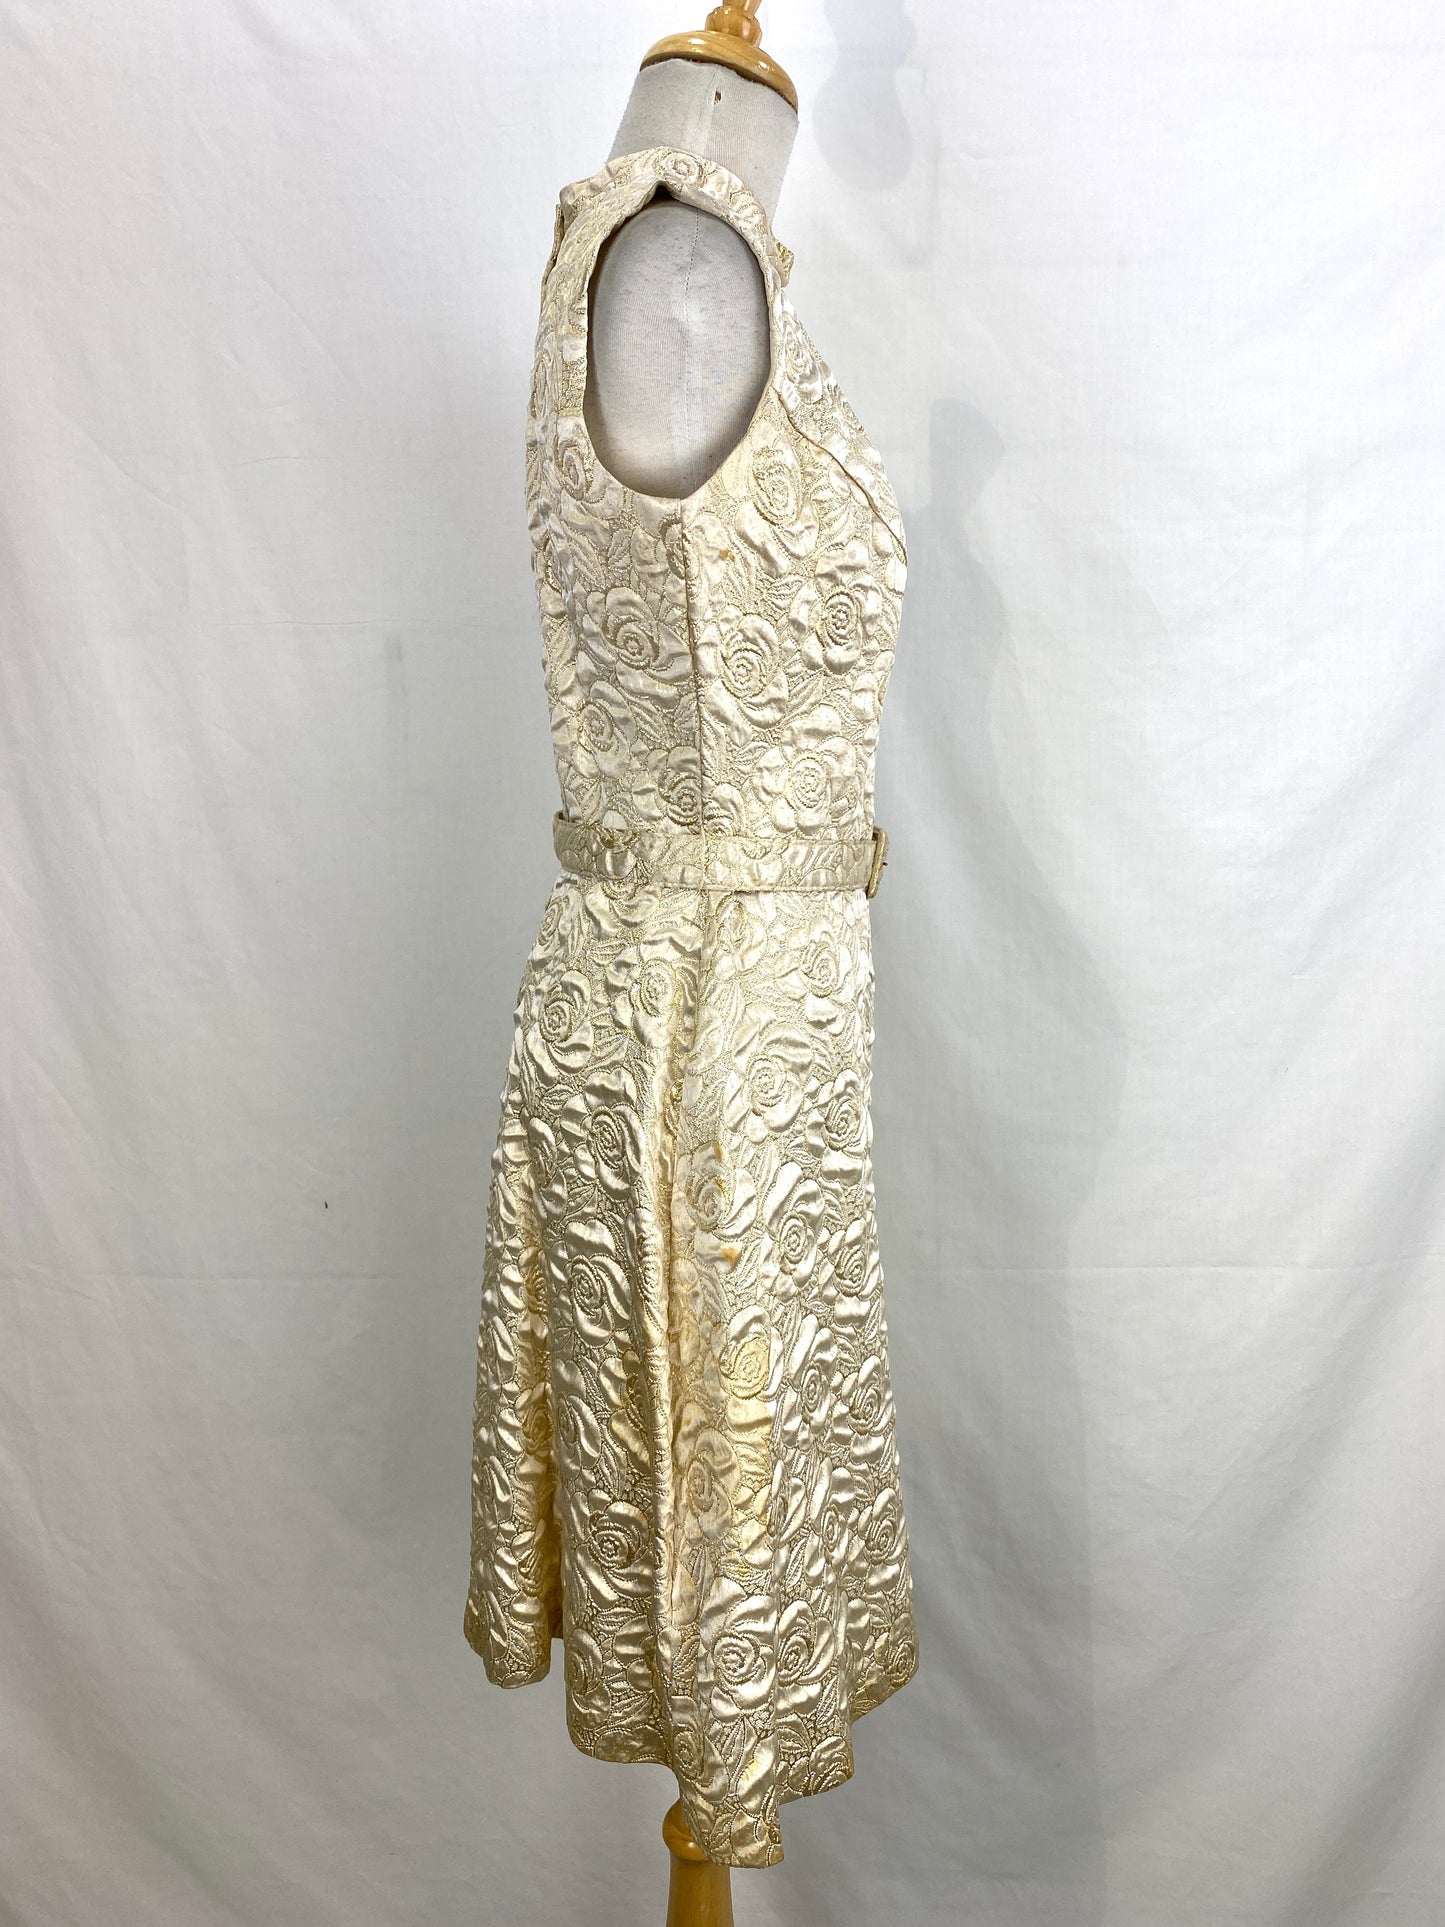 Vintage 1950s Metallic Gold Satin & Lurex Quilted Floral Dress, Medium 